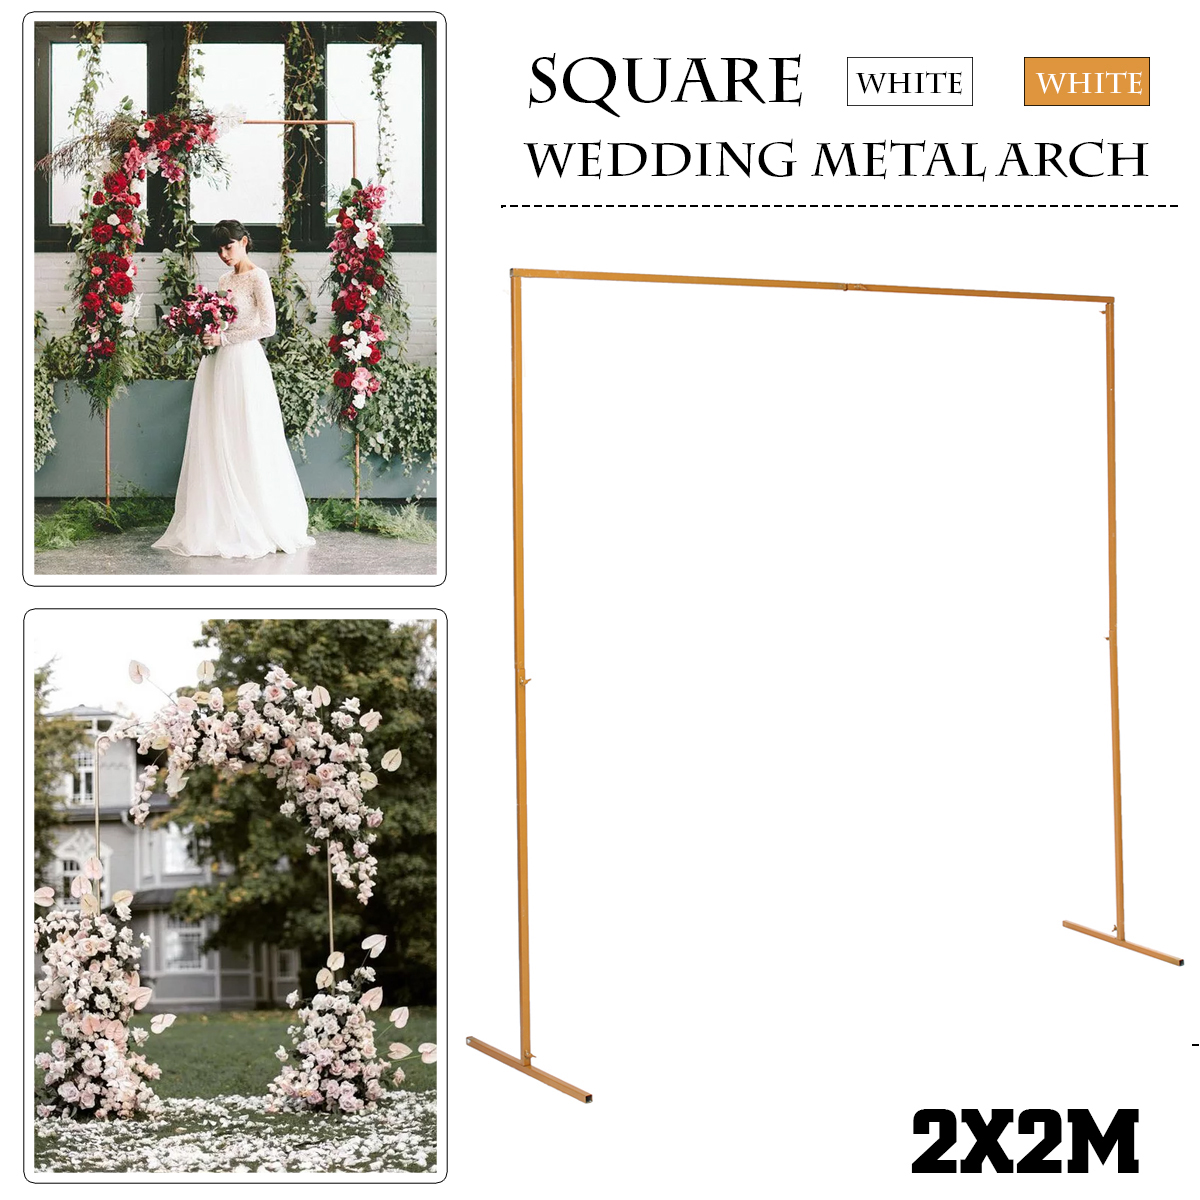 Garfans-Square-Metal-Arch-Wedding-Party-Bridal-Prom-Garden-Floral-Decoration-Party-Supplies-Decorati-1635386-2